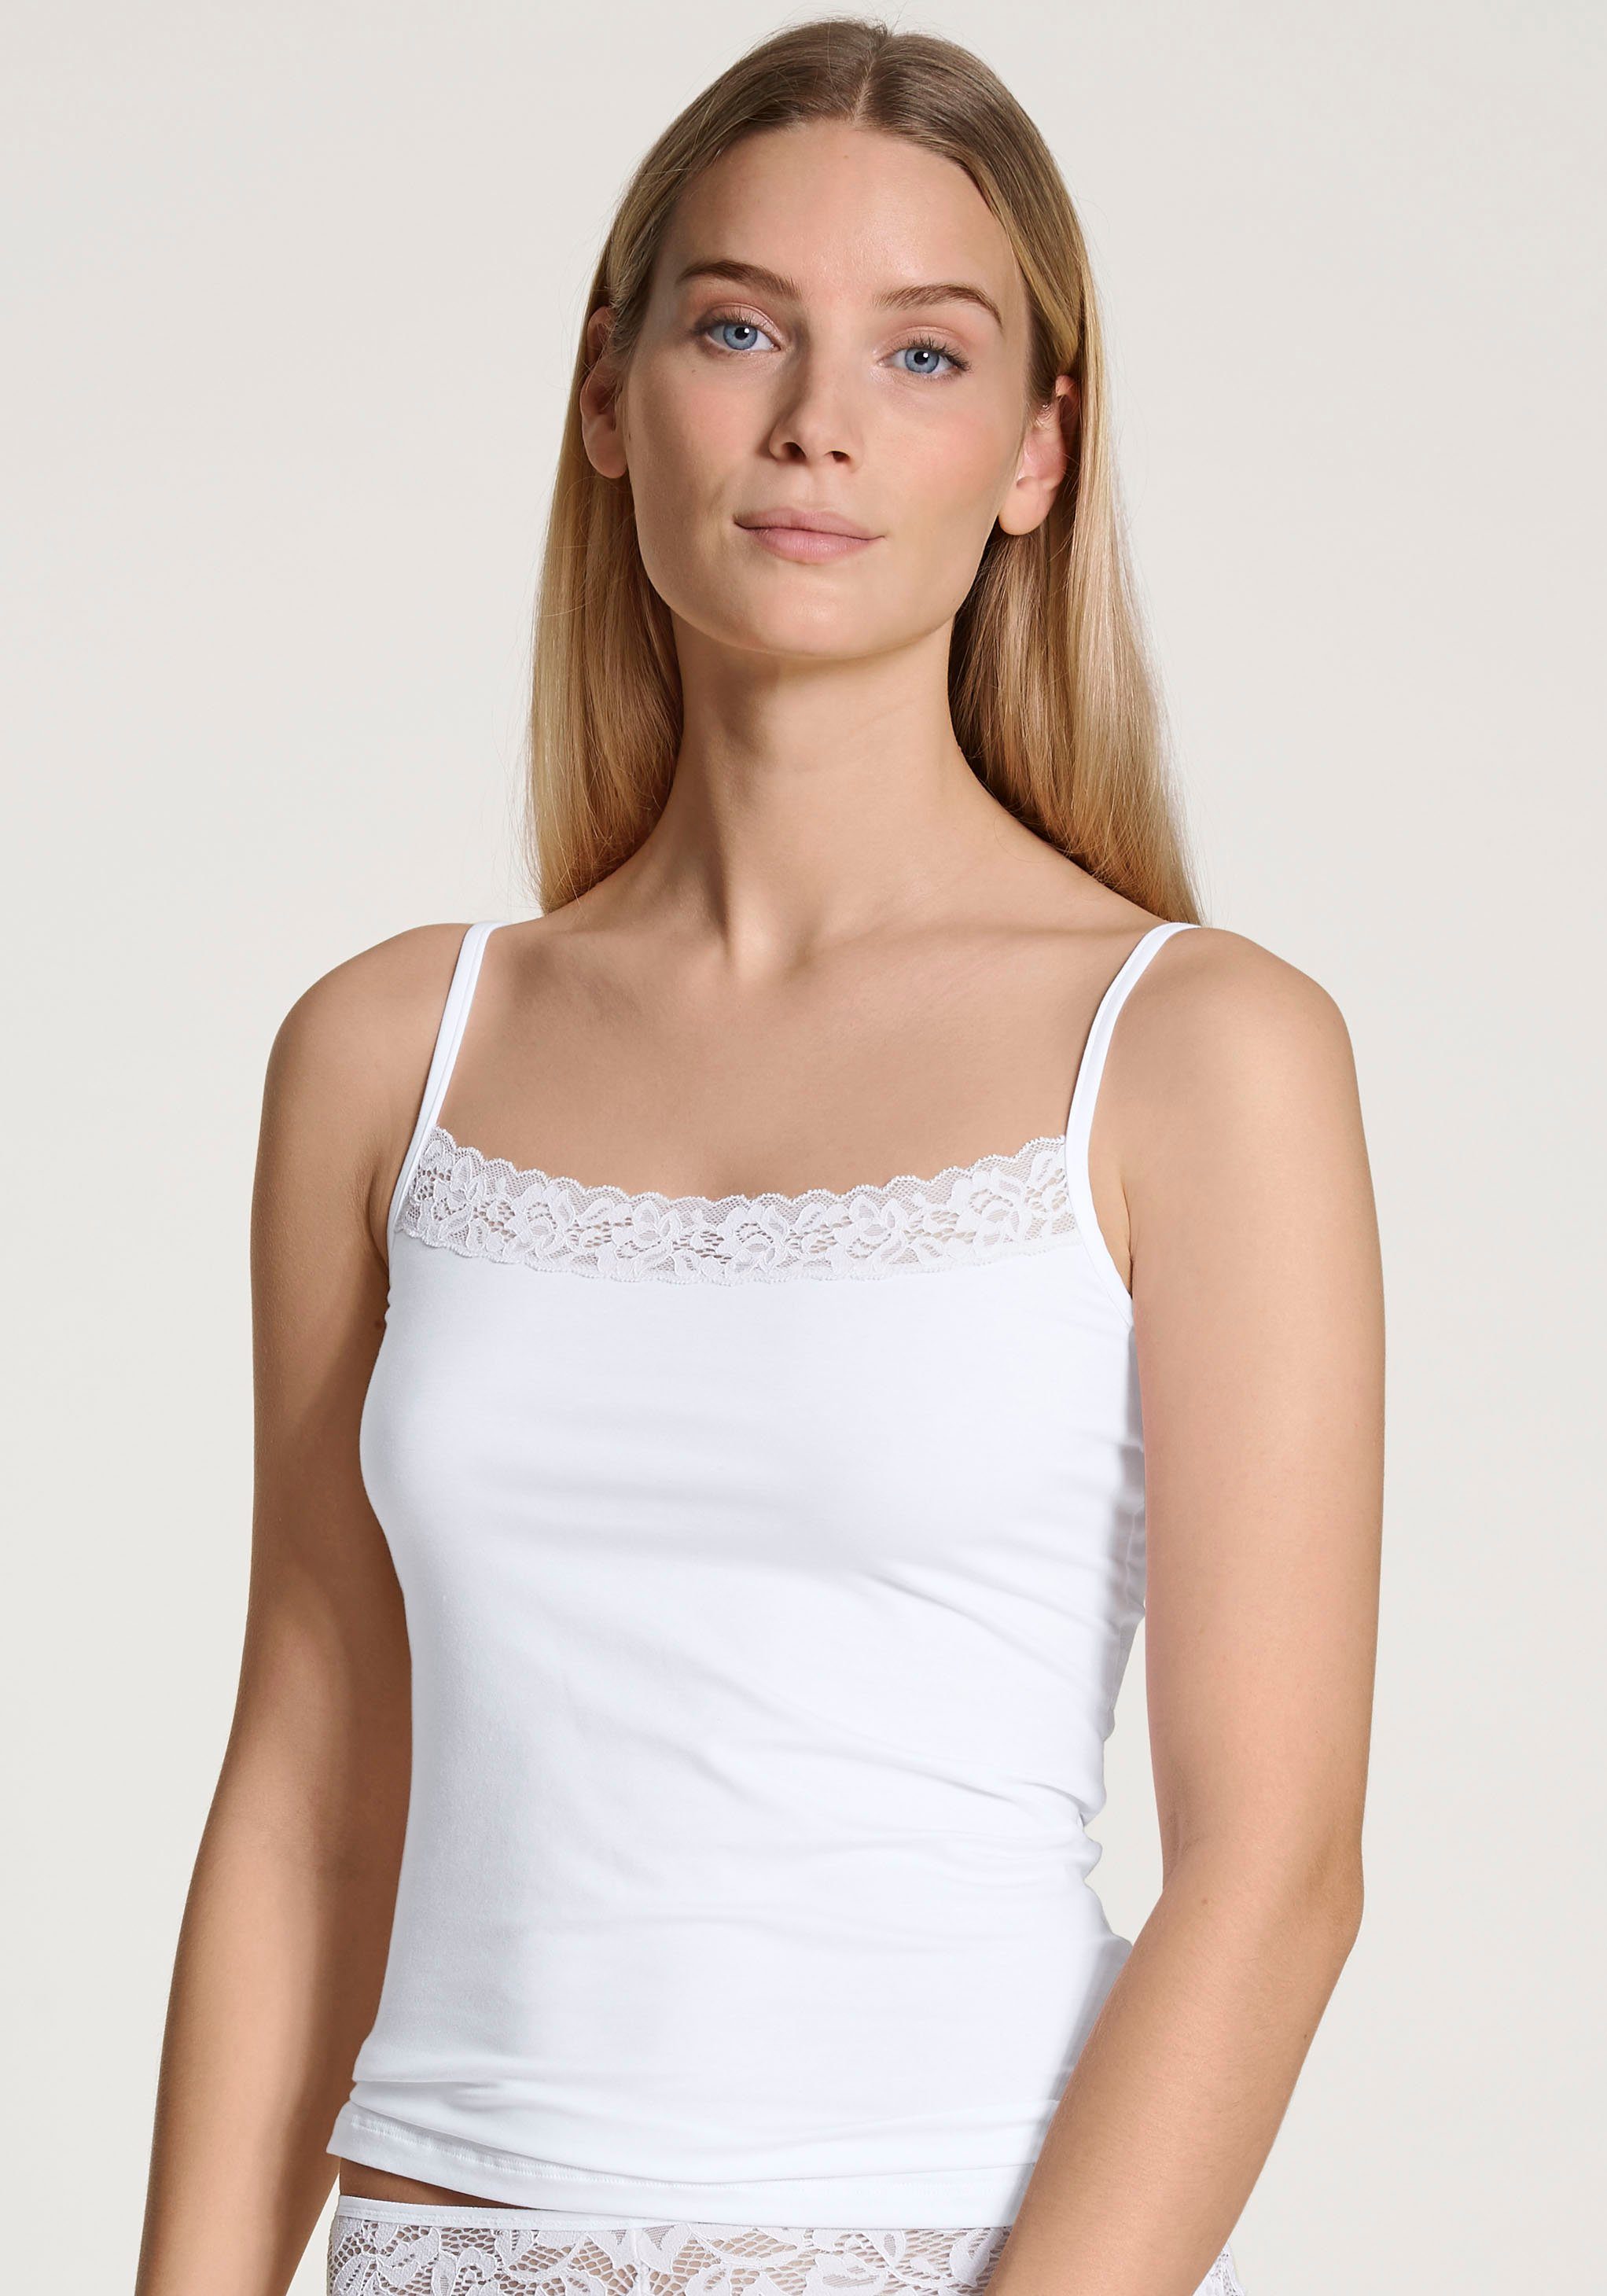 zarter Comfort Natural CALIDA weiss Trägern, Spitzen-Look verstellbaren mit Unterhemd Lace Top